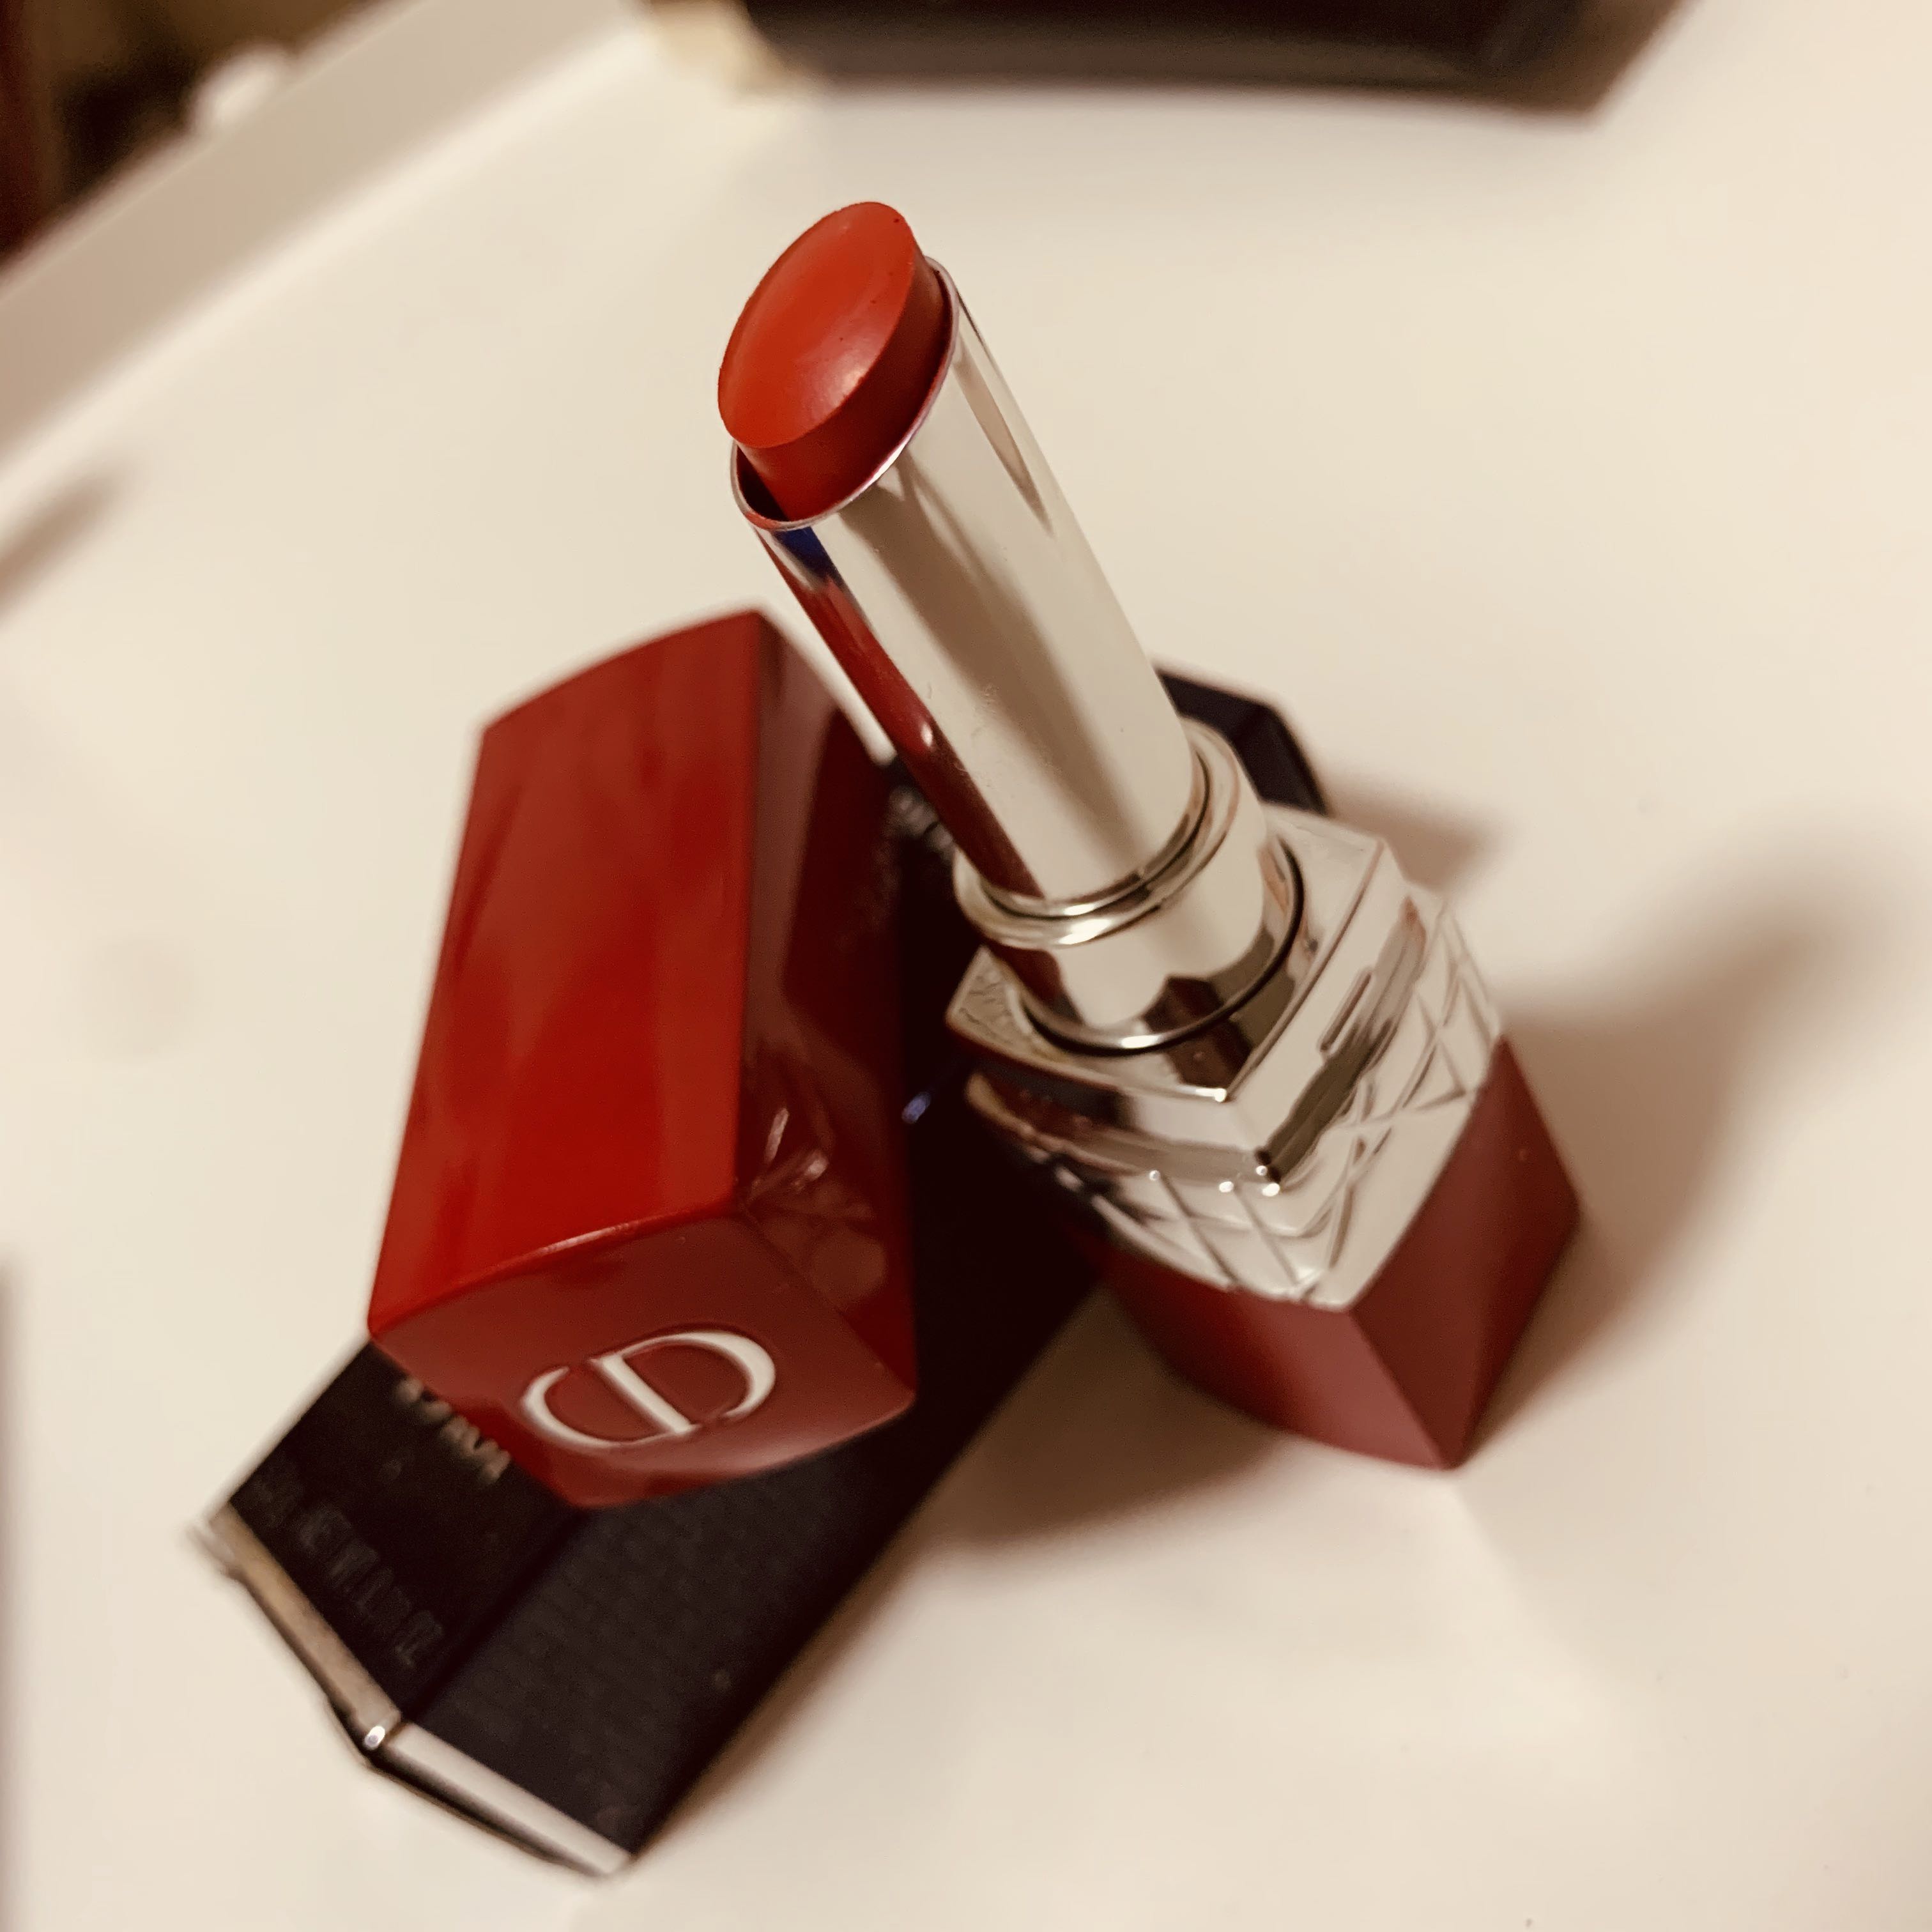 dior 777 lipstick